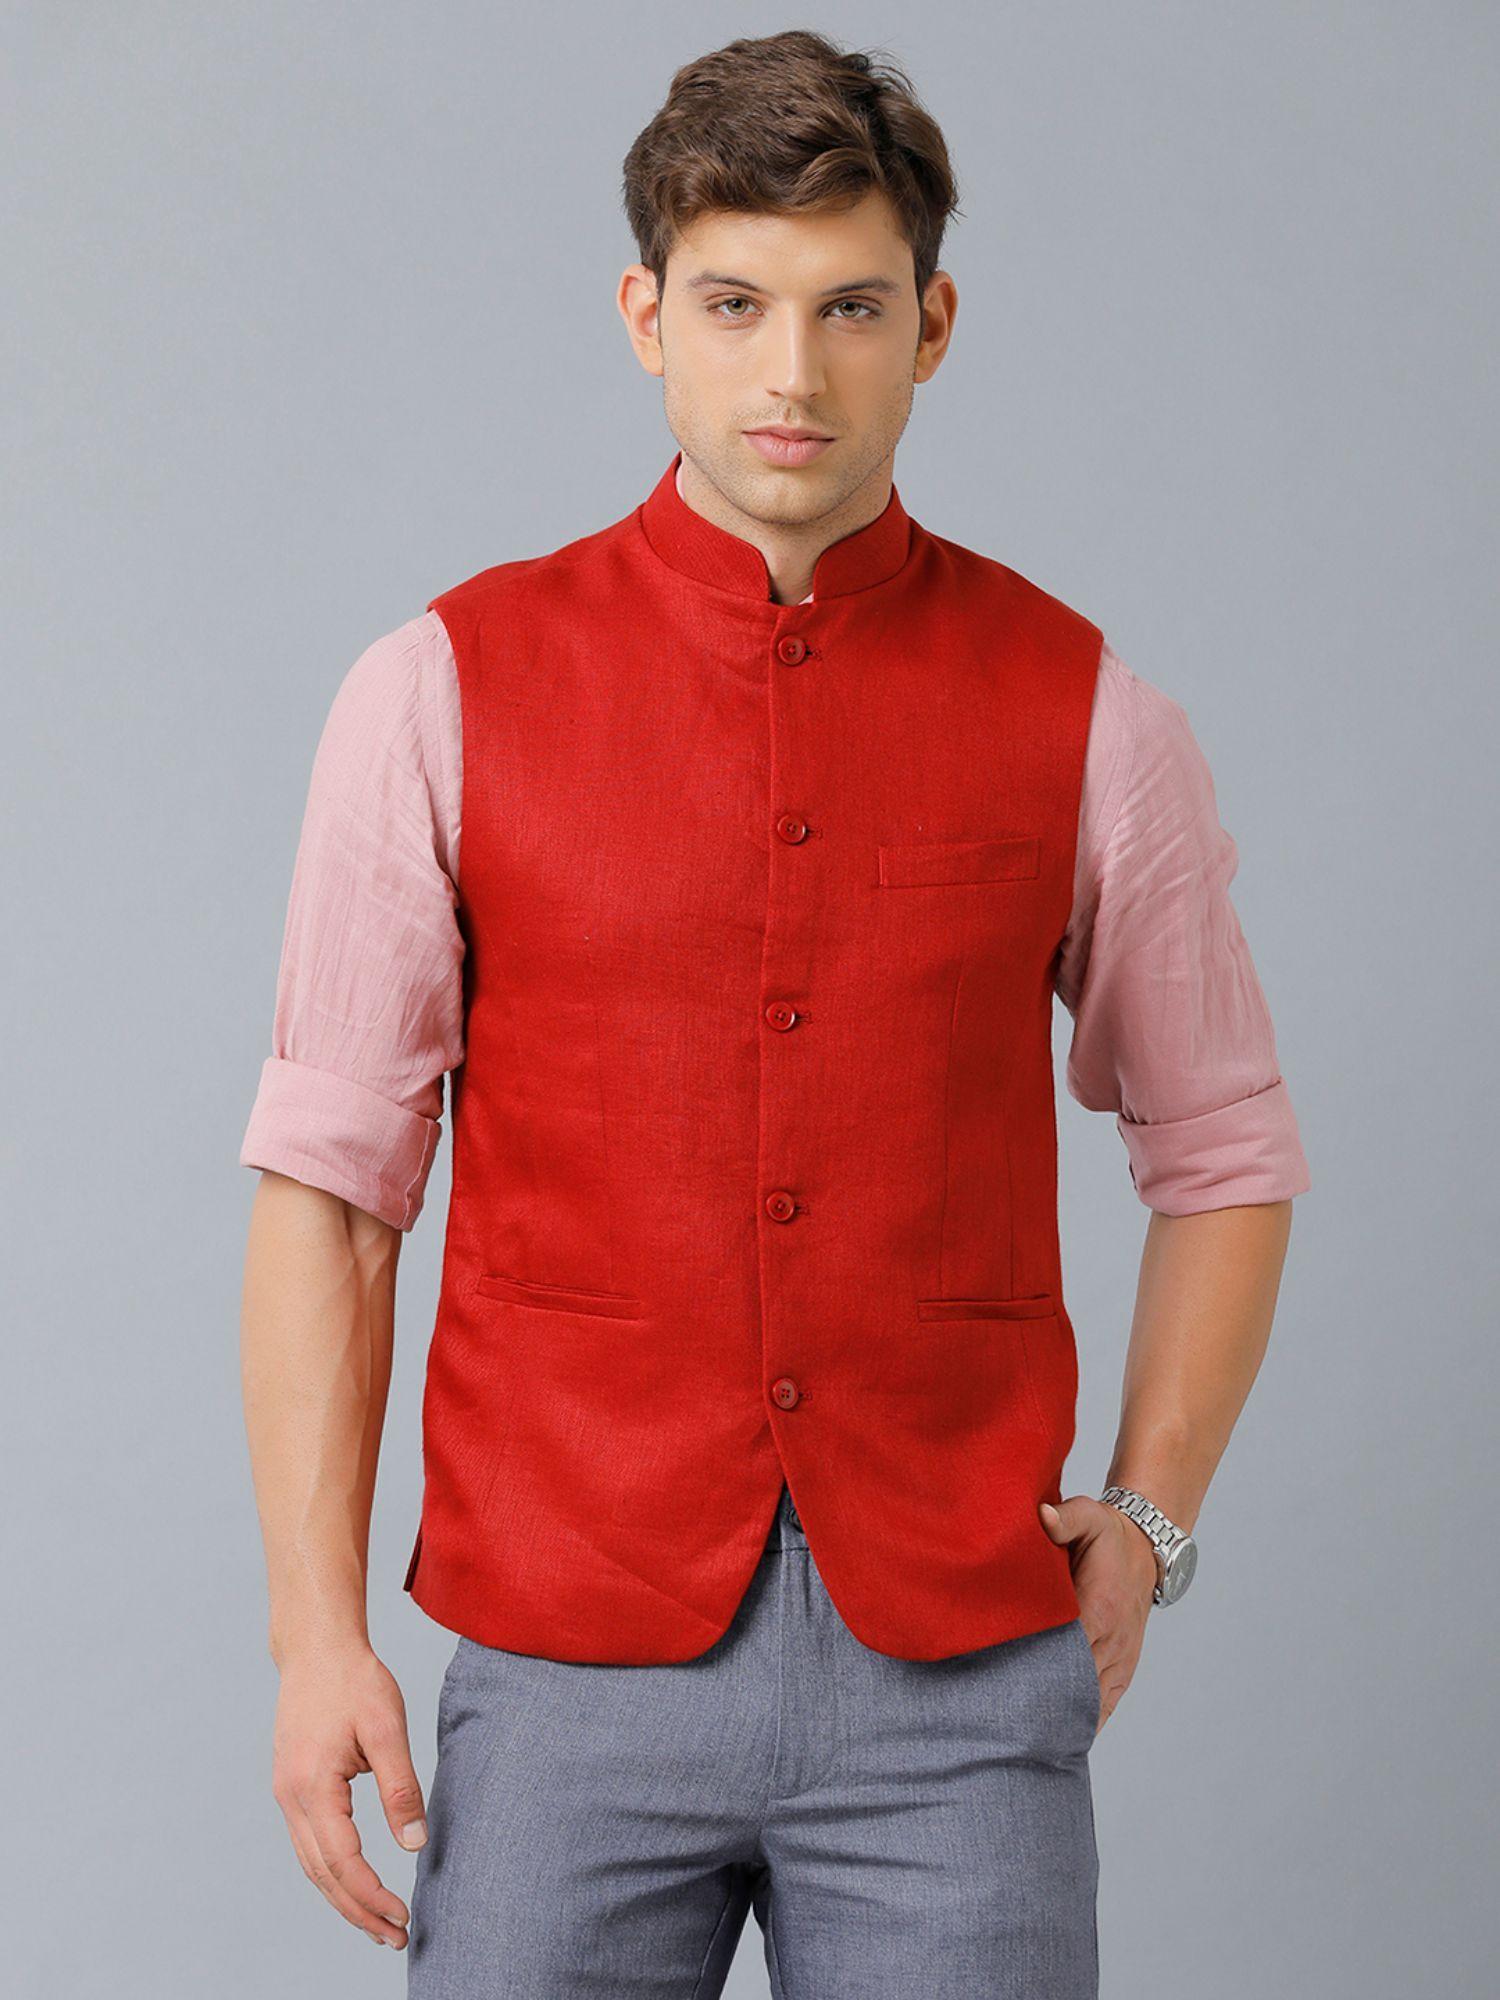 men's pure linen red solid nehru jacket